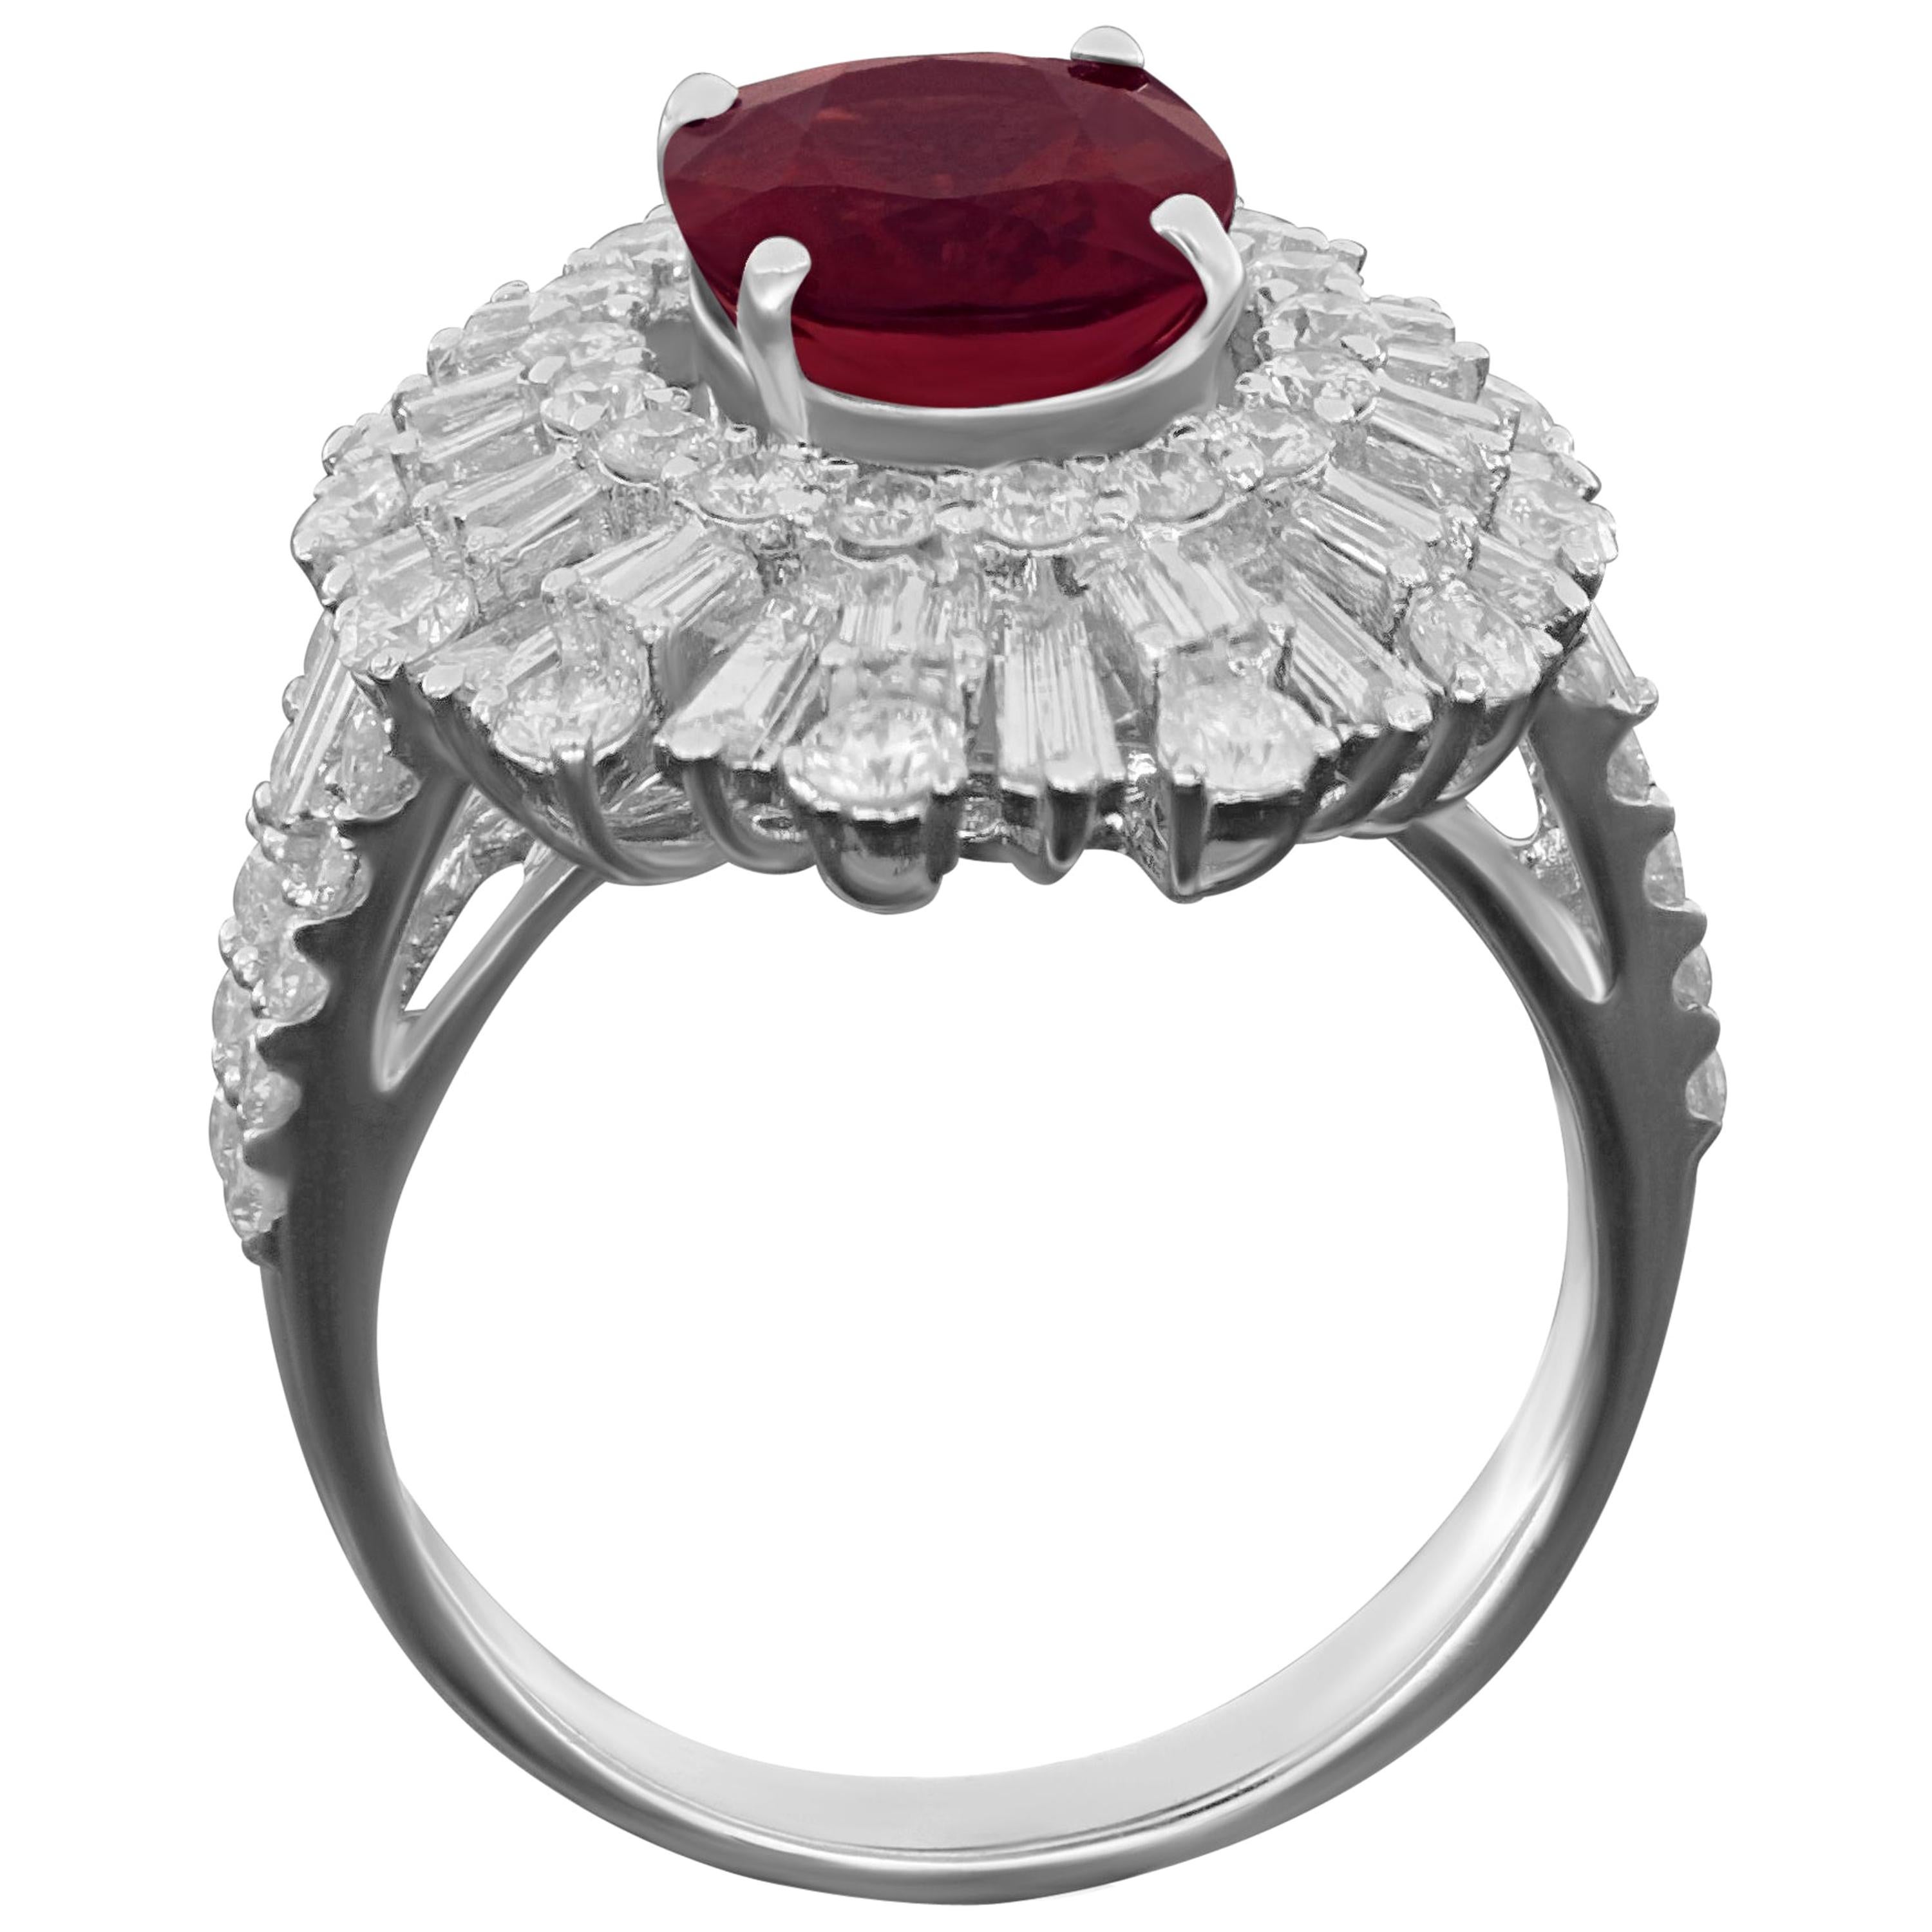 Amwaj White Gold 18 Karat Ring with Diamonds and Ruby